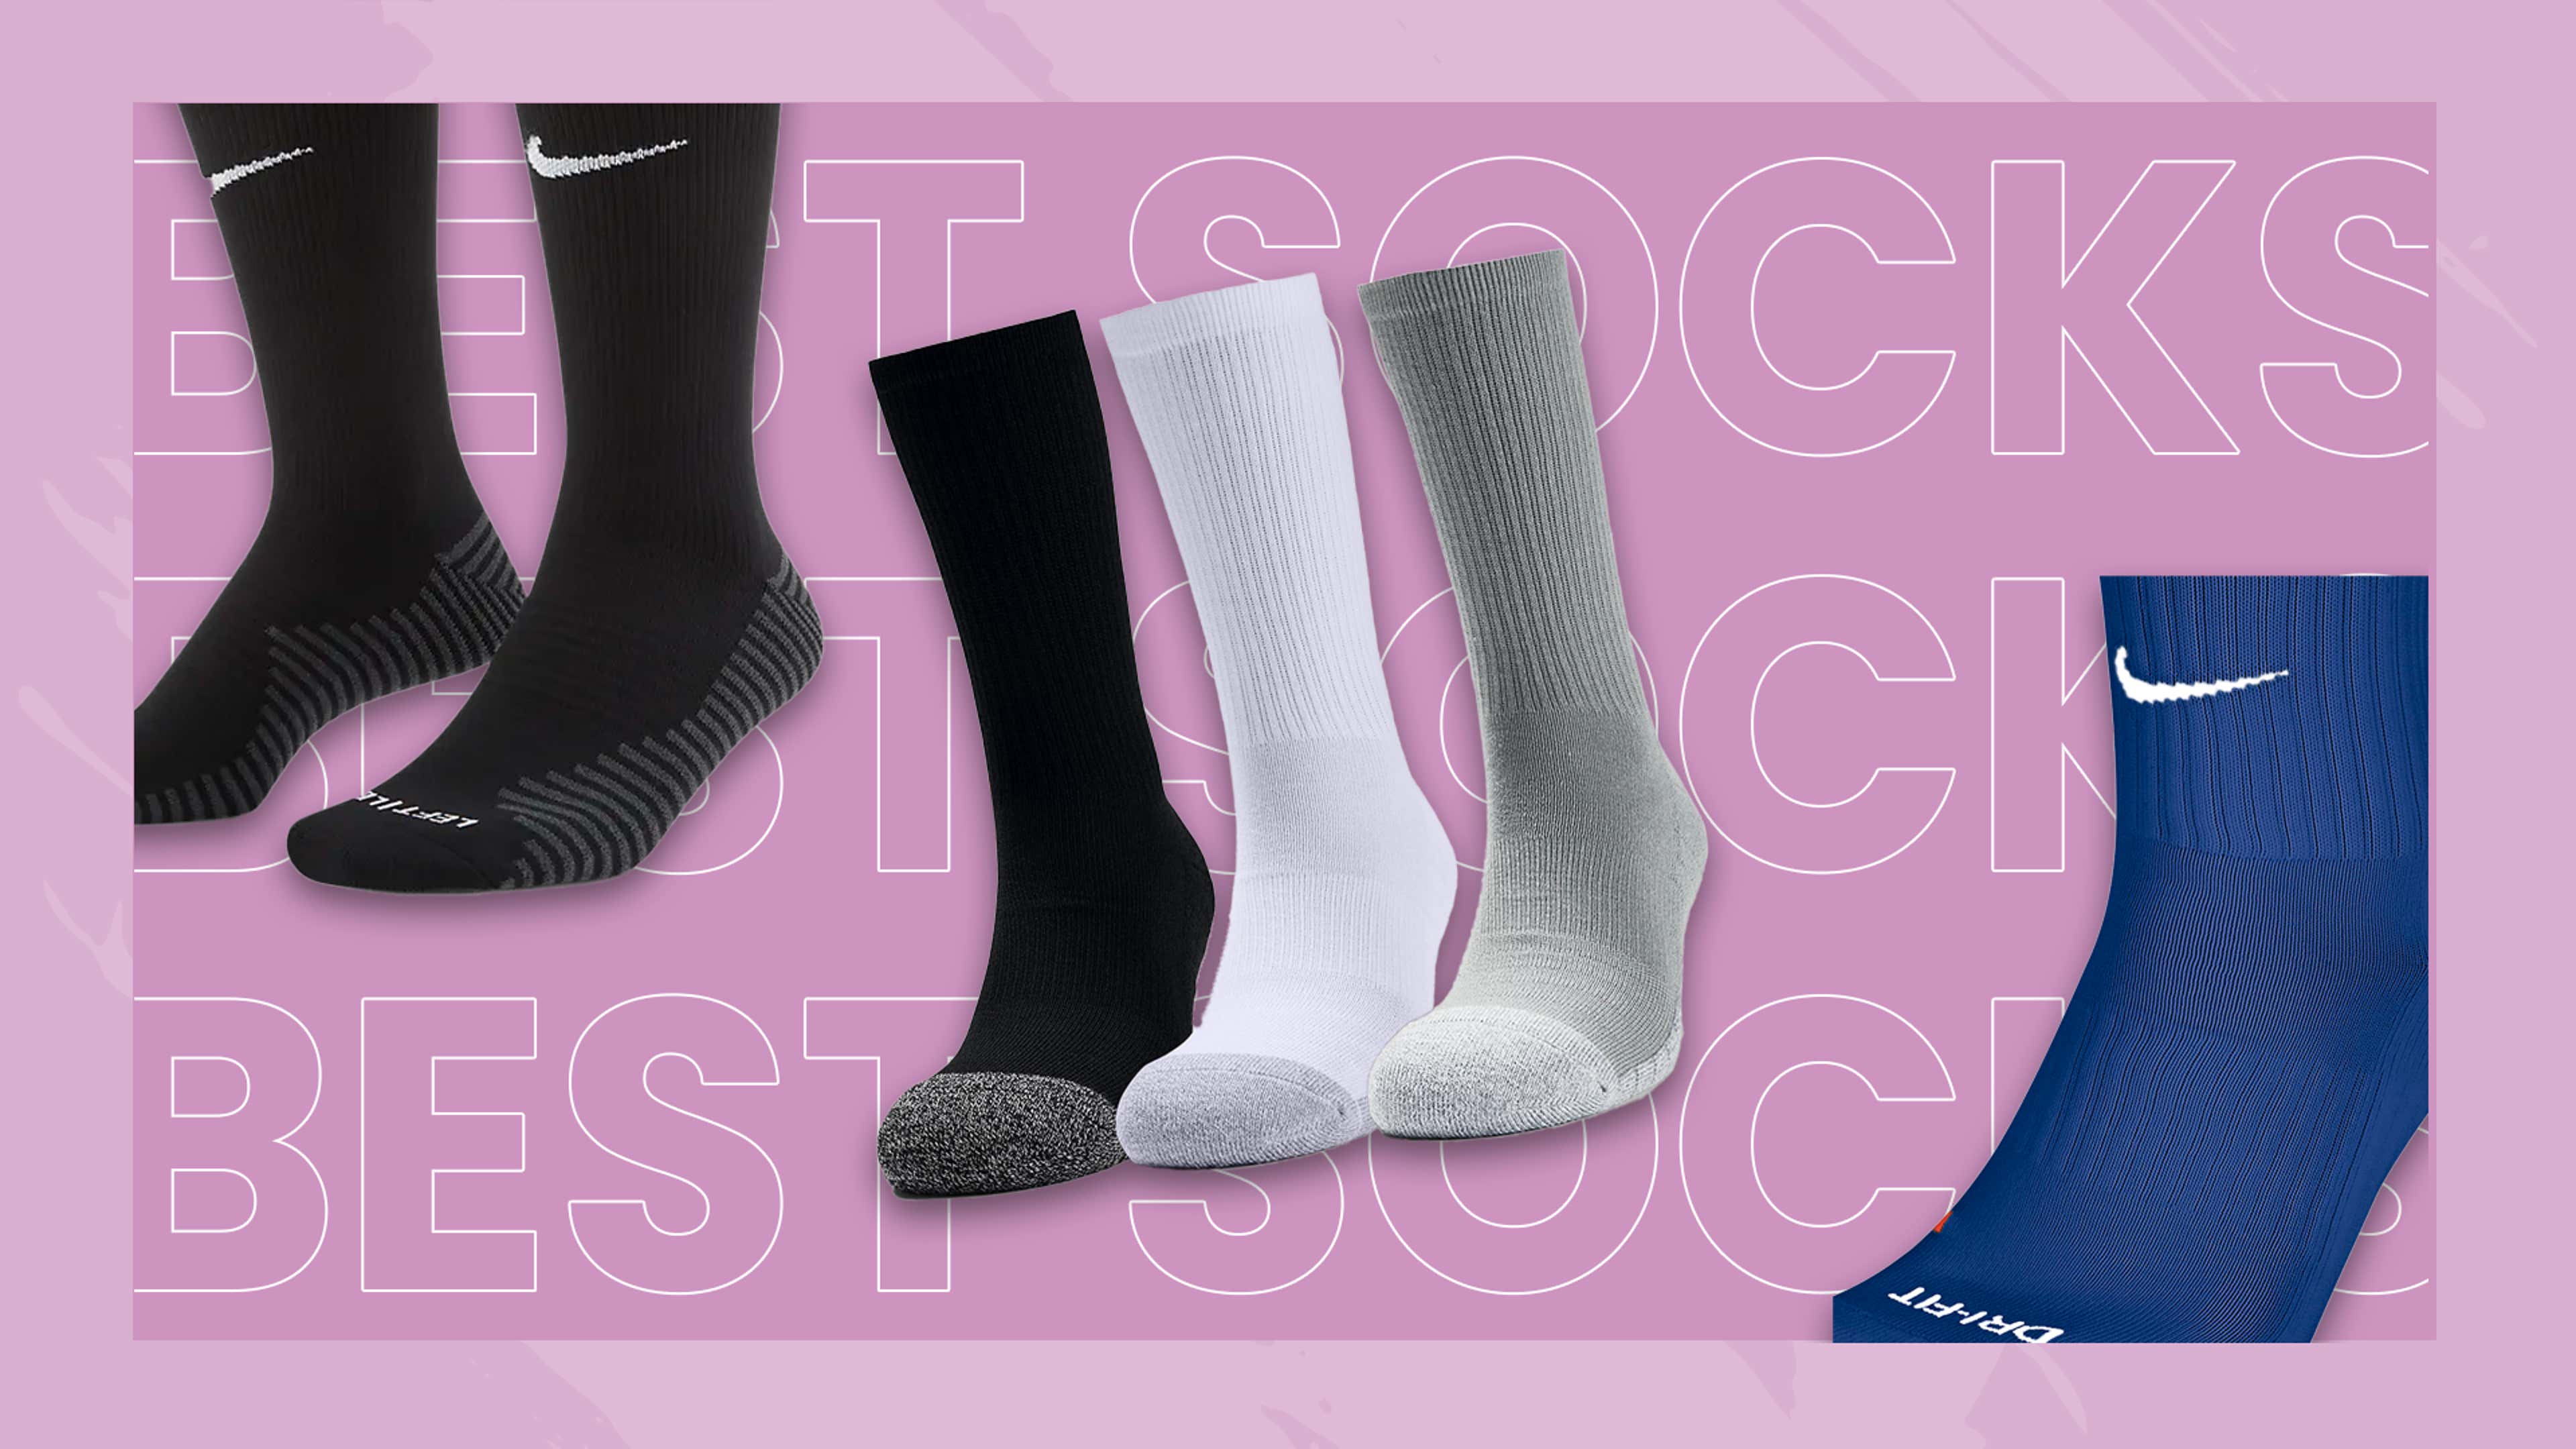 Men's Football Grip Socks, Upgrade Your Game